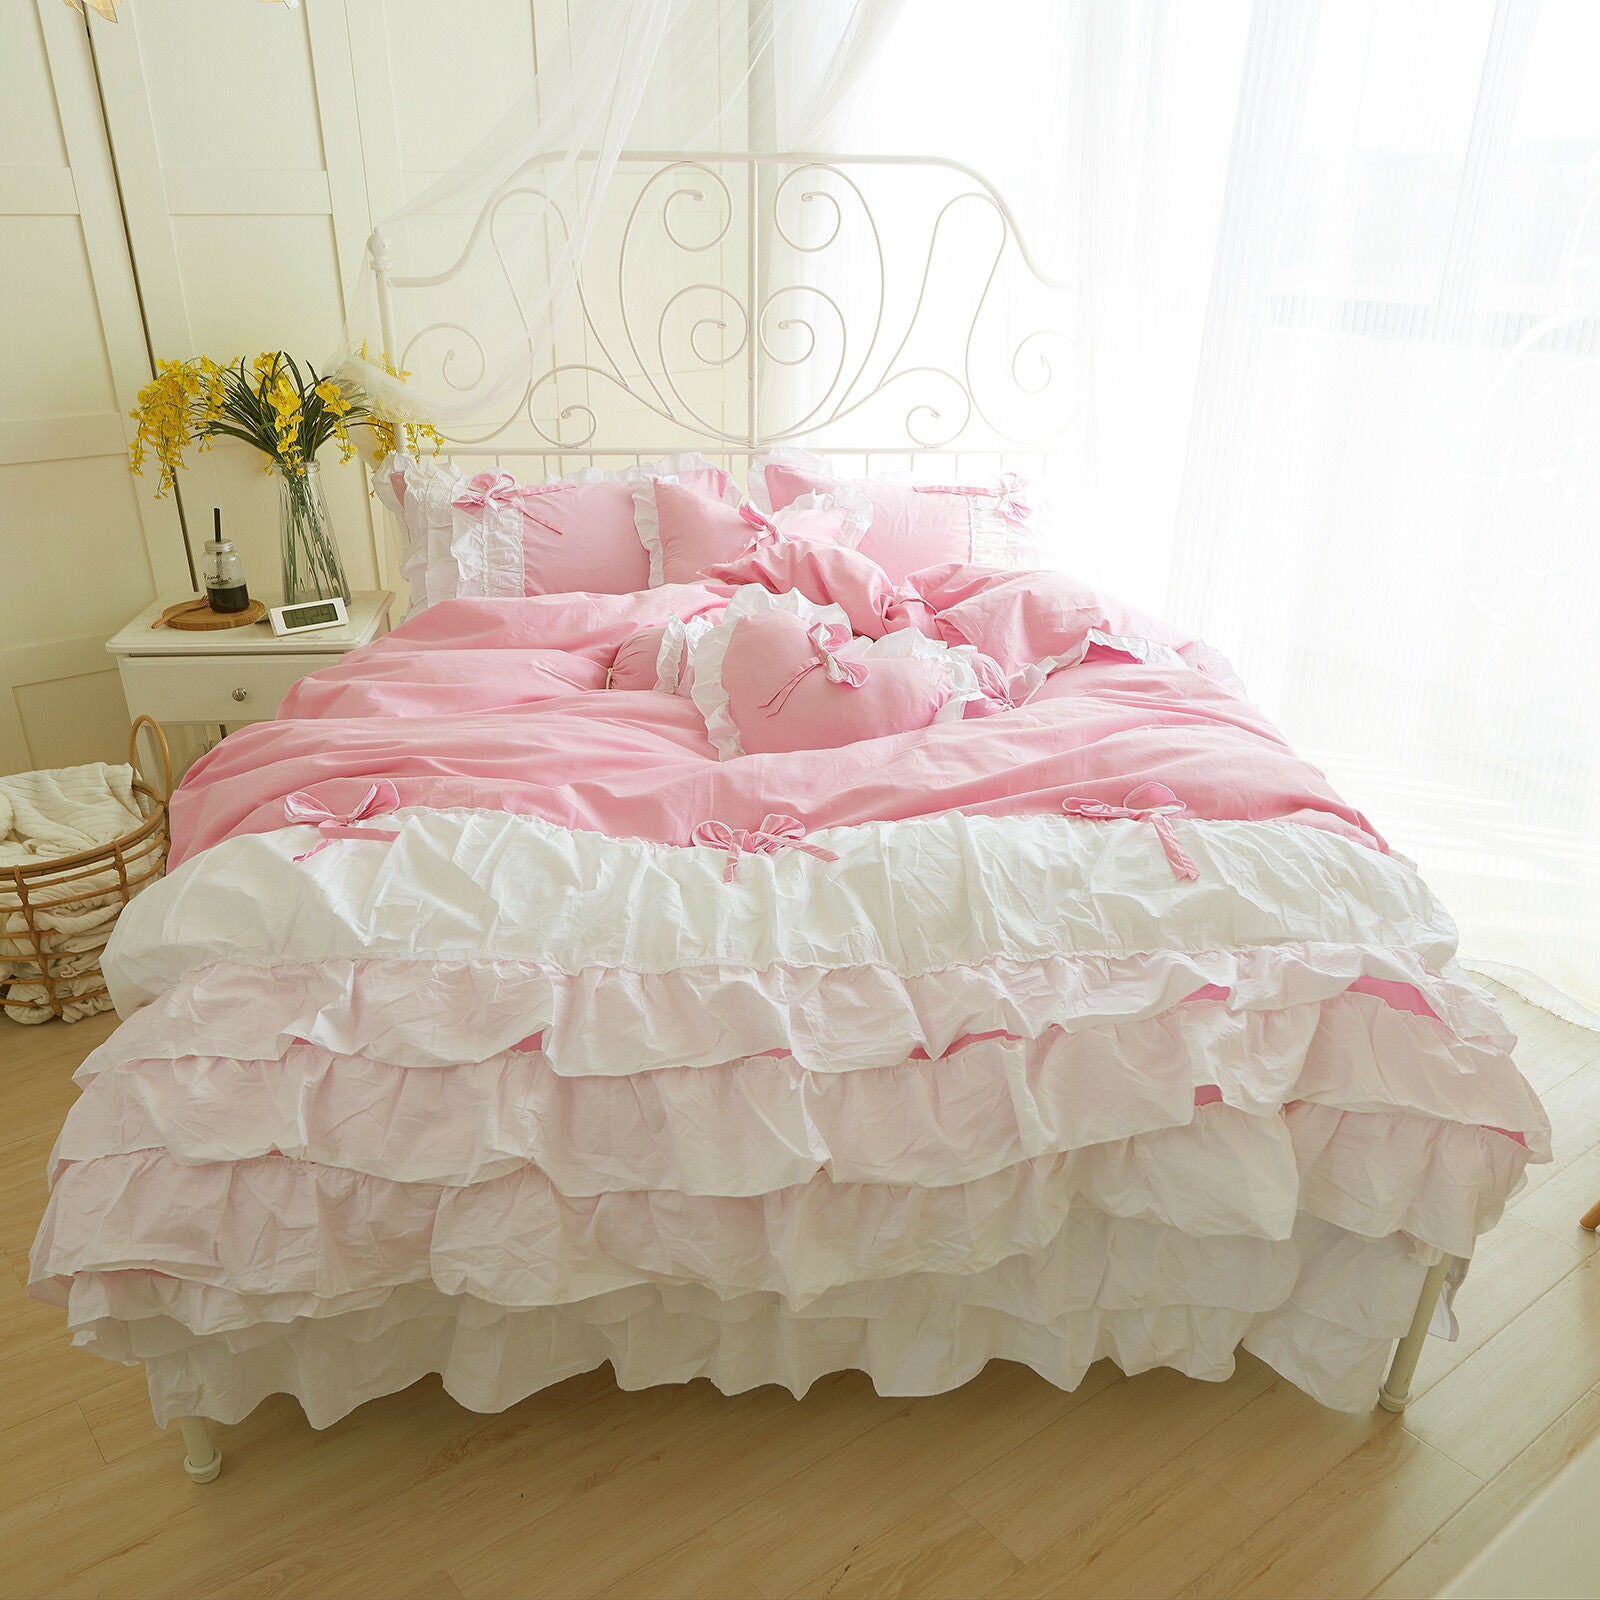 Lace Ruffled Girlish Cotton Duvet Cover Set, Princess Duvet Cover